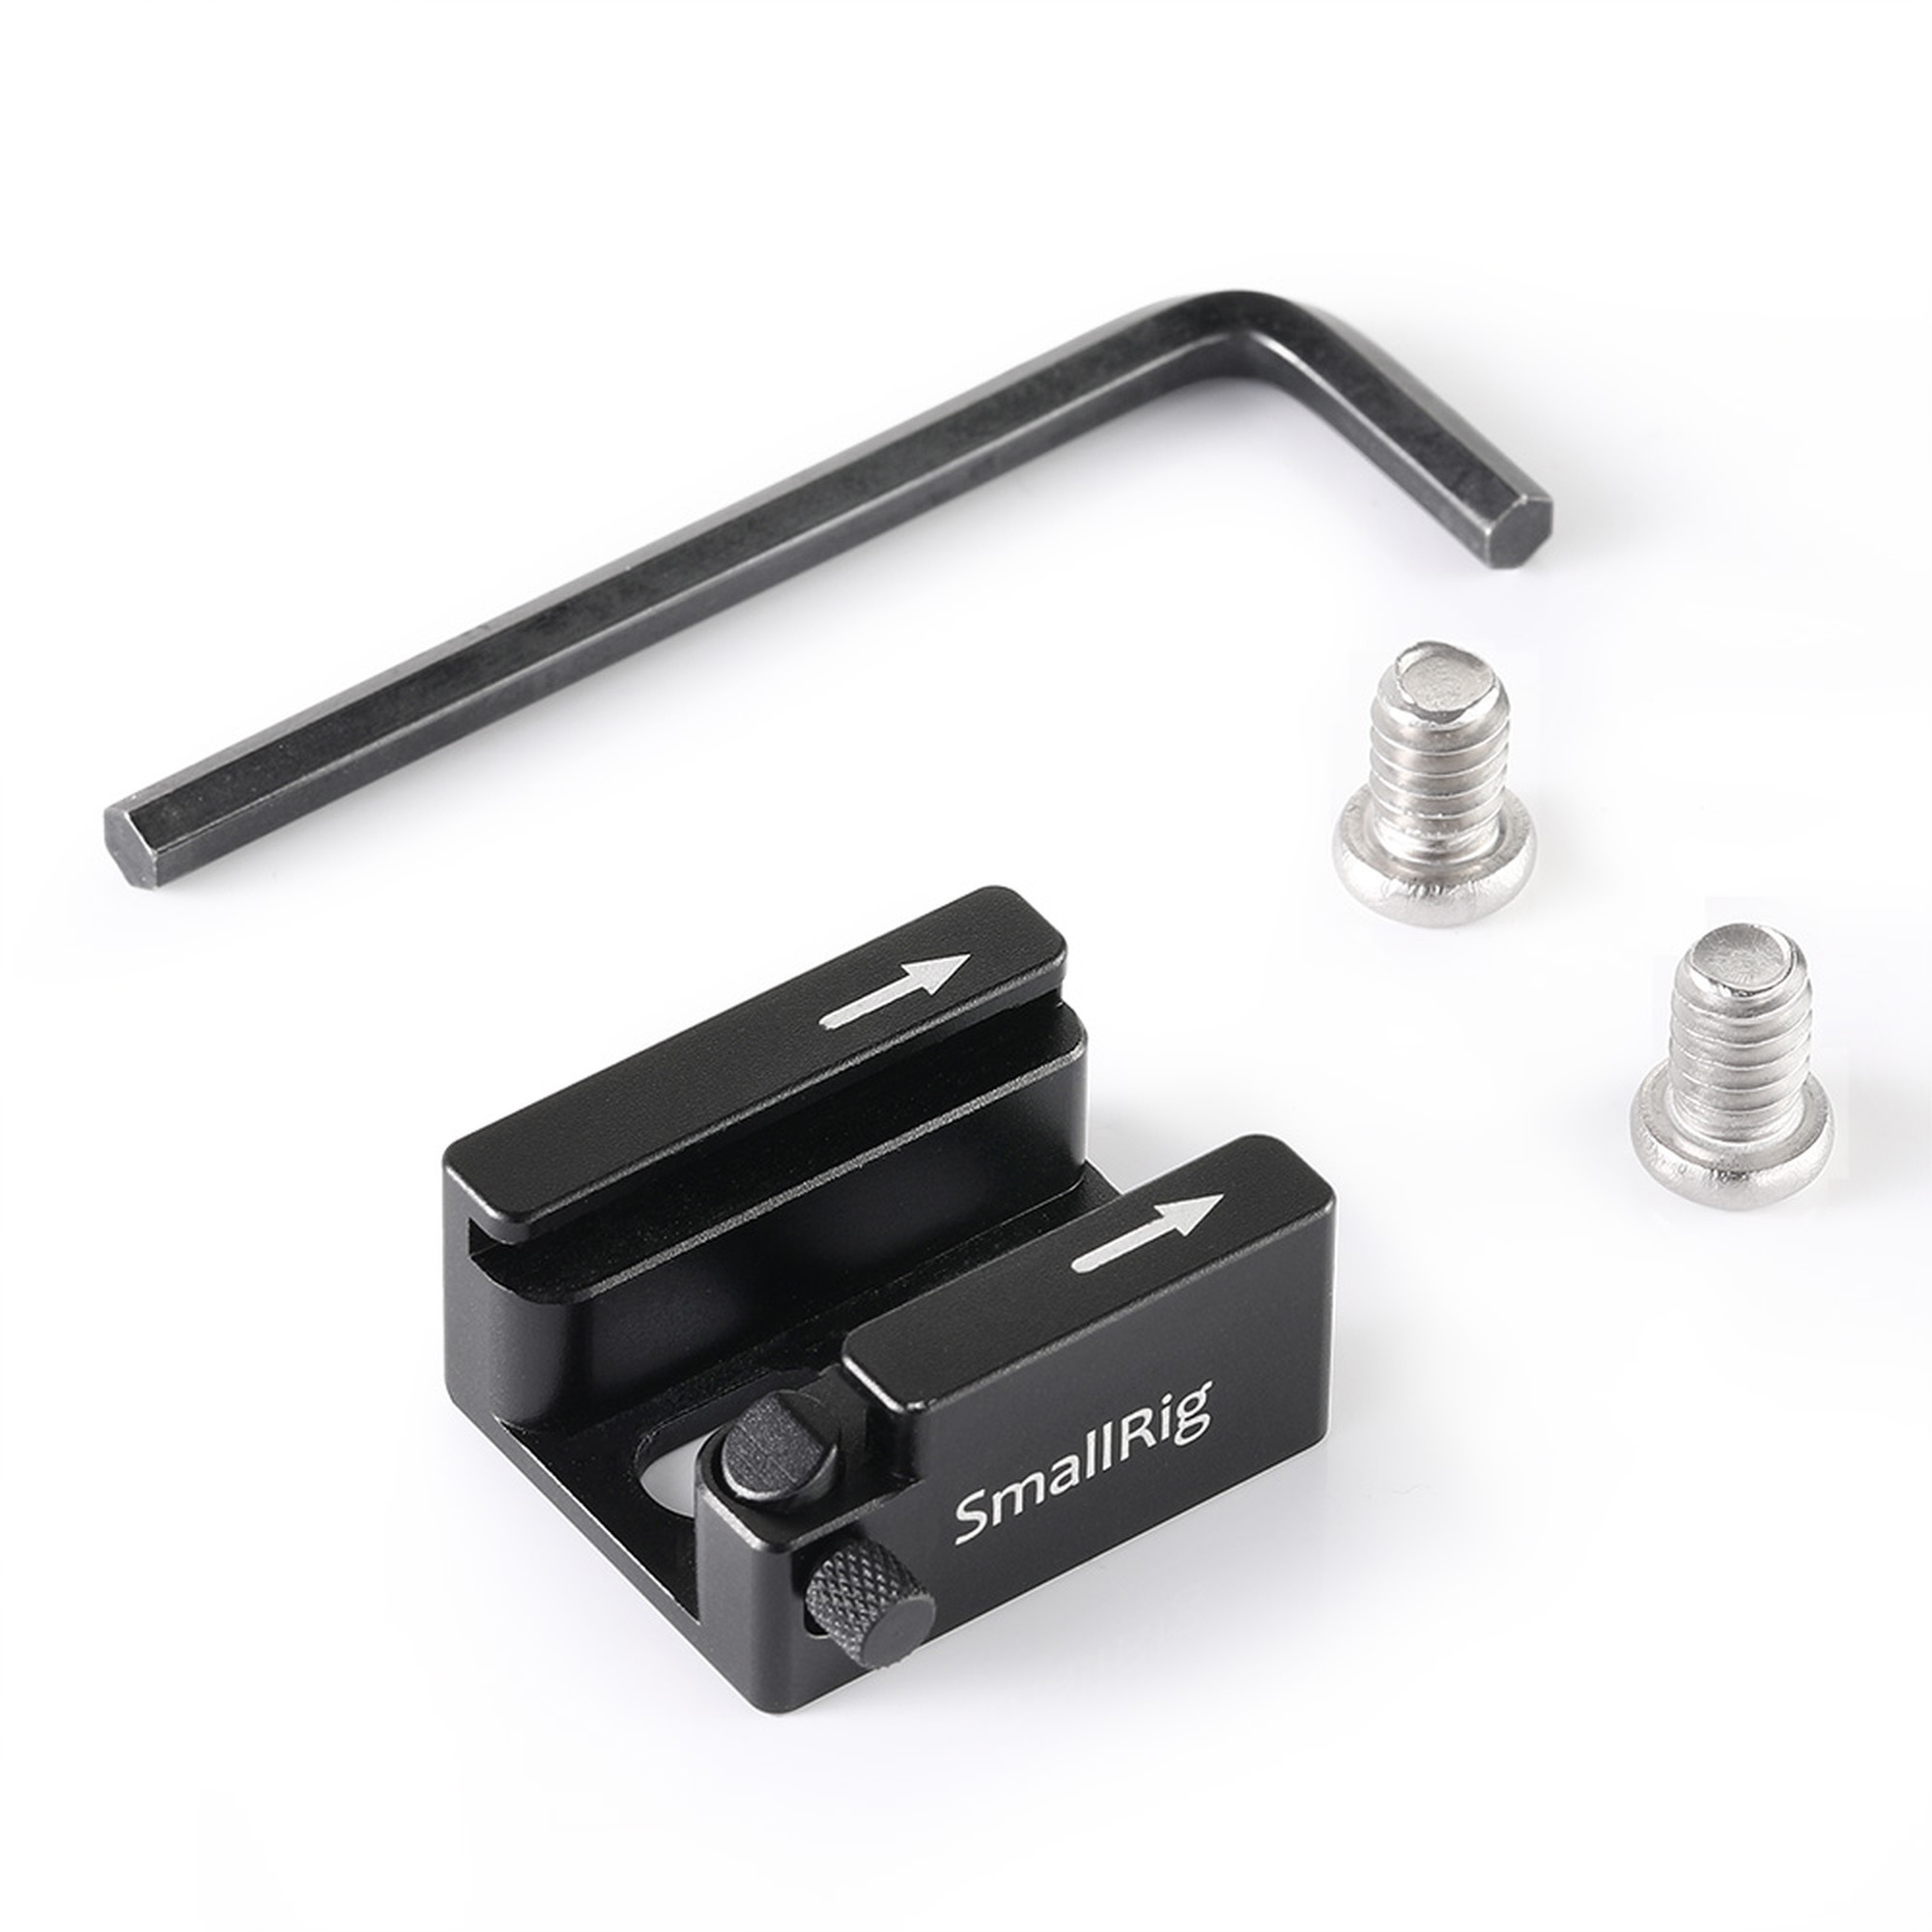 SmallRig Cold Shoe Mount Adapter with Anti-off Button 2260 ฮอทชูเสริมติดชุดริกพร้อมปุ่มกันลื่น ราคา 390 บาท